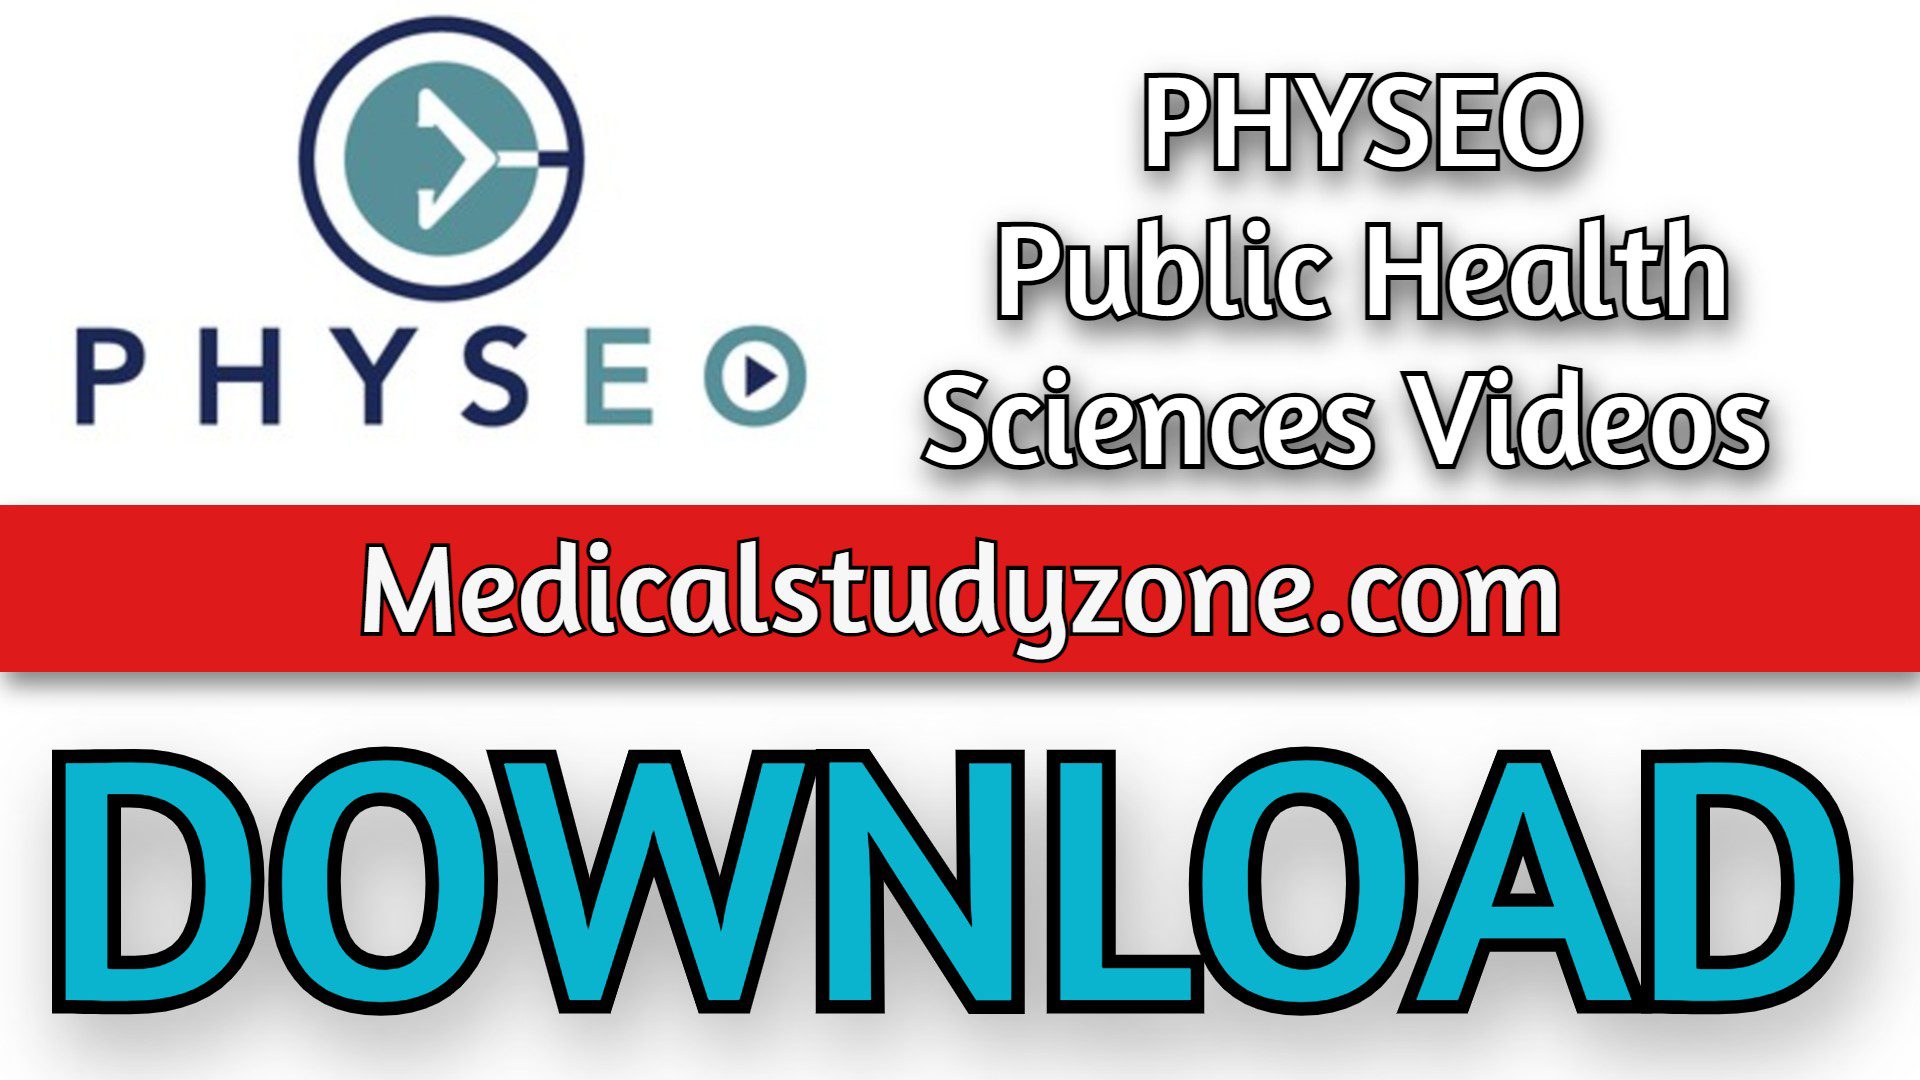 PHYSEO Public Health Sciences Videos 2021 Free Download